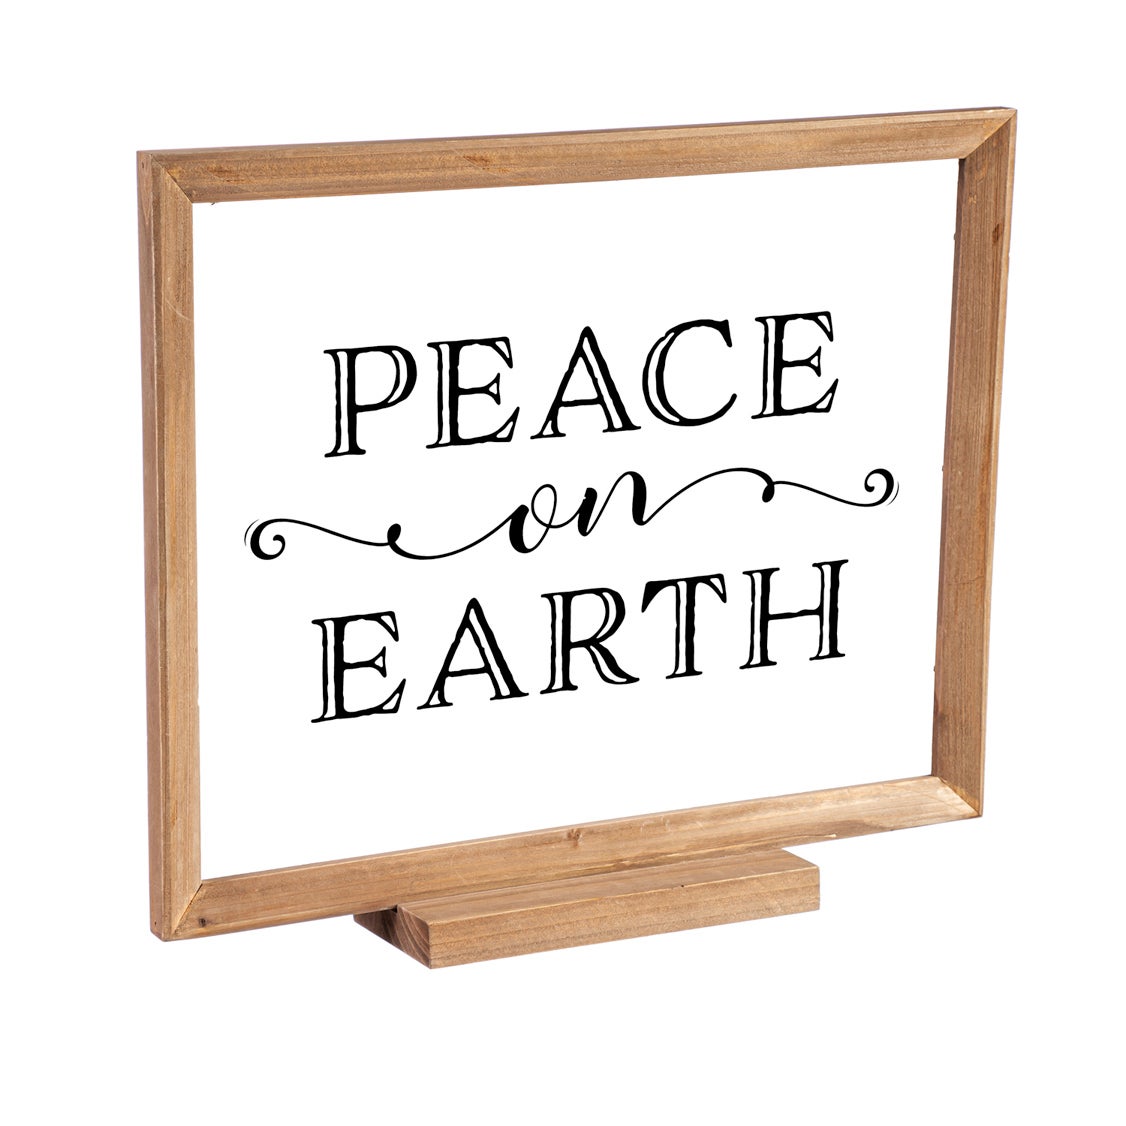 Wood Framed Decor, Set of 3 "Season's Greetings""Peace on Earth""Let it Snow"